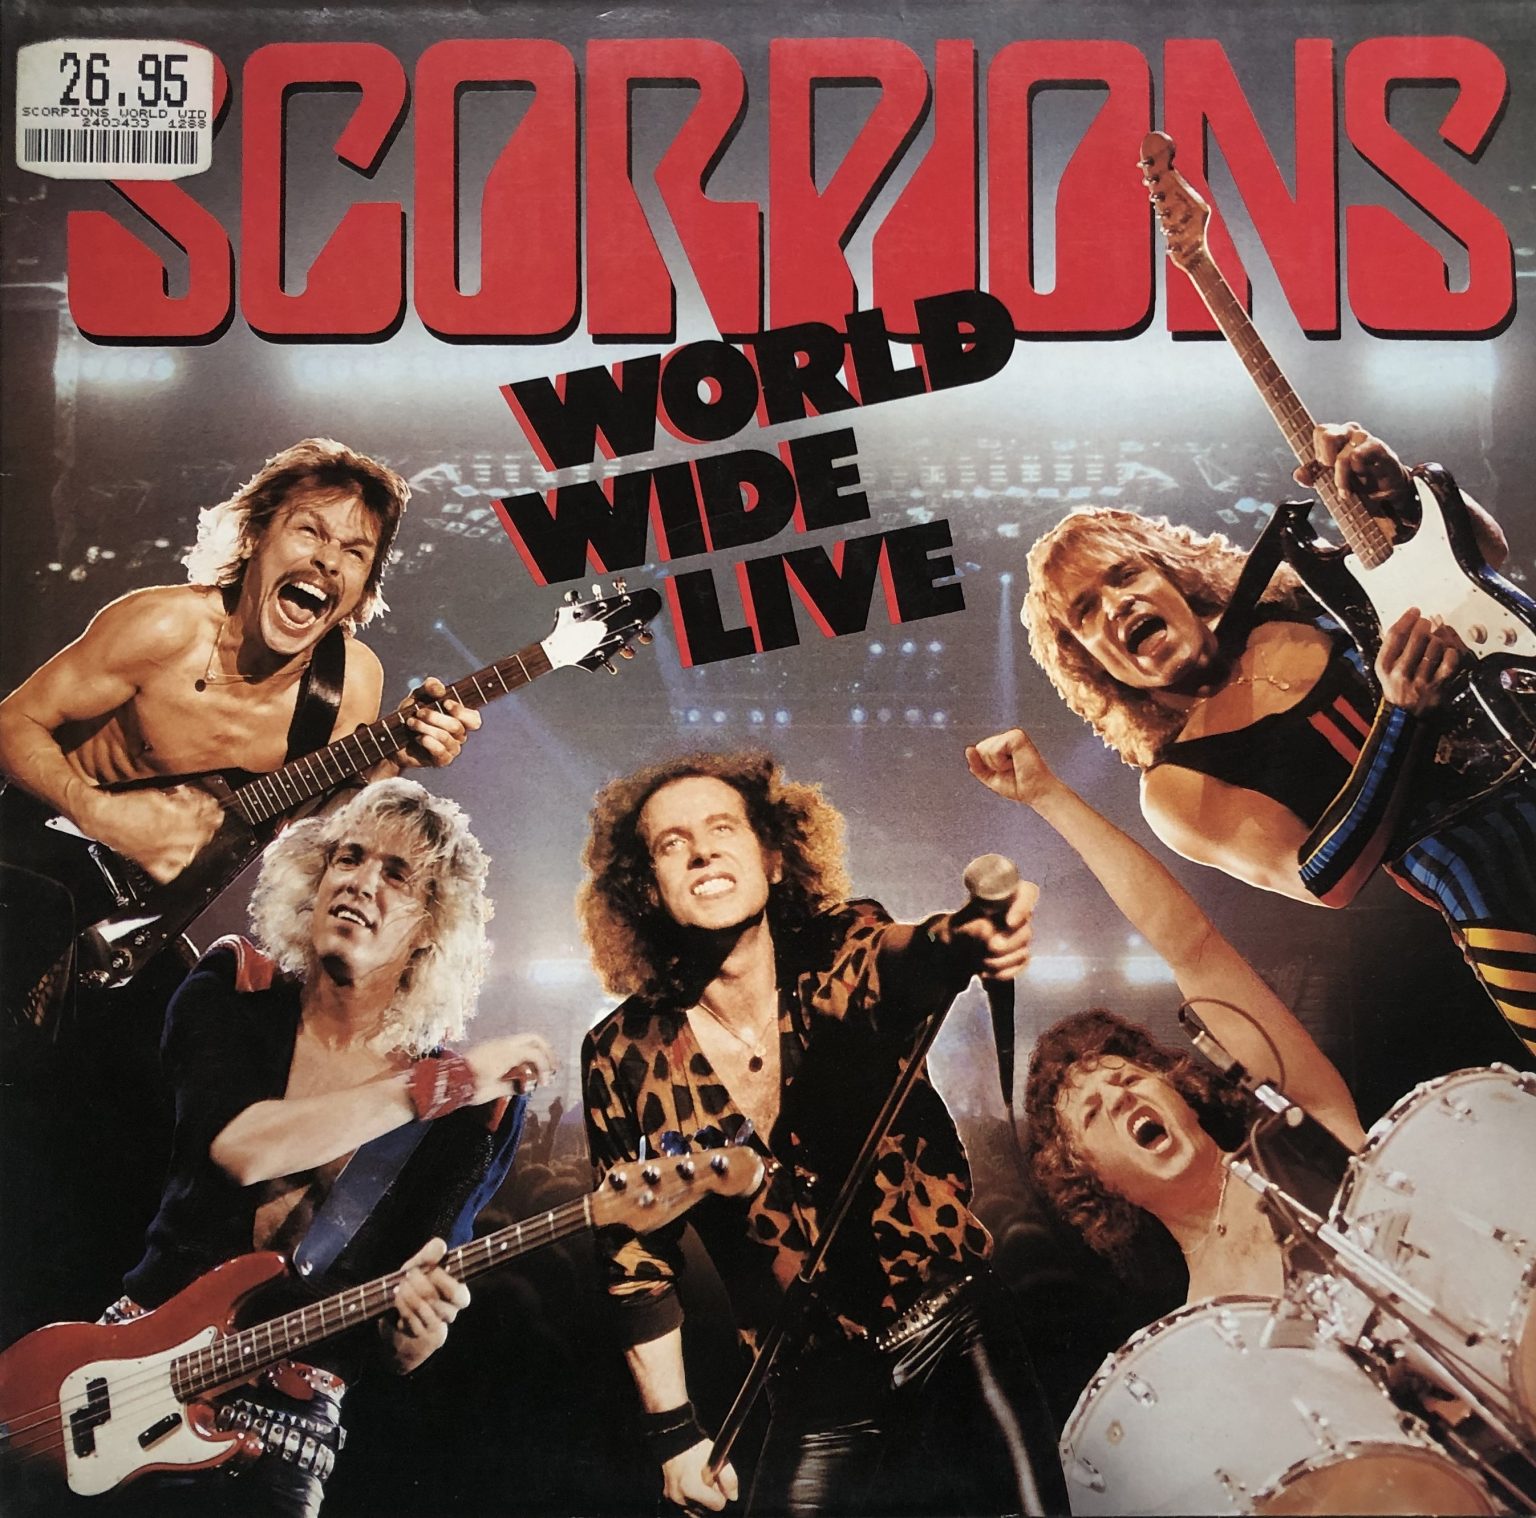 Scorpions – Word Wide Live LP